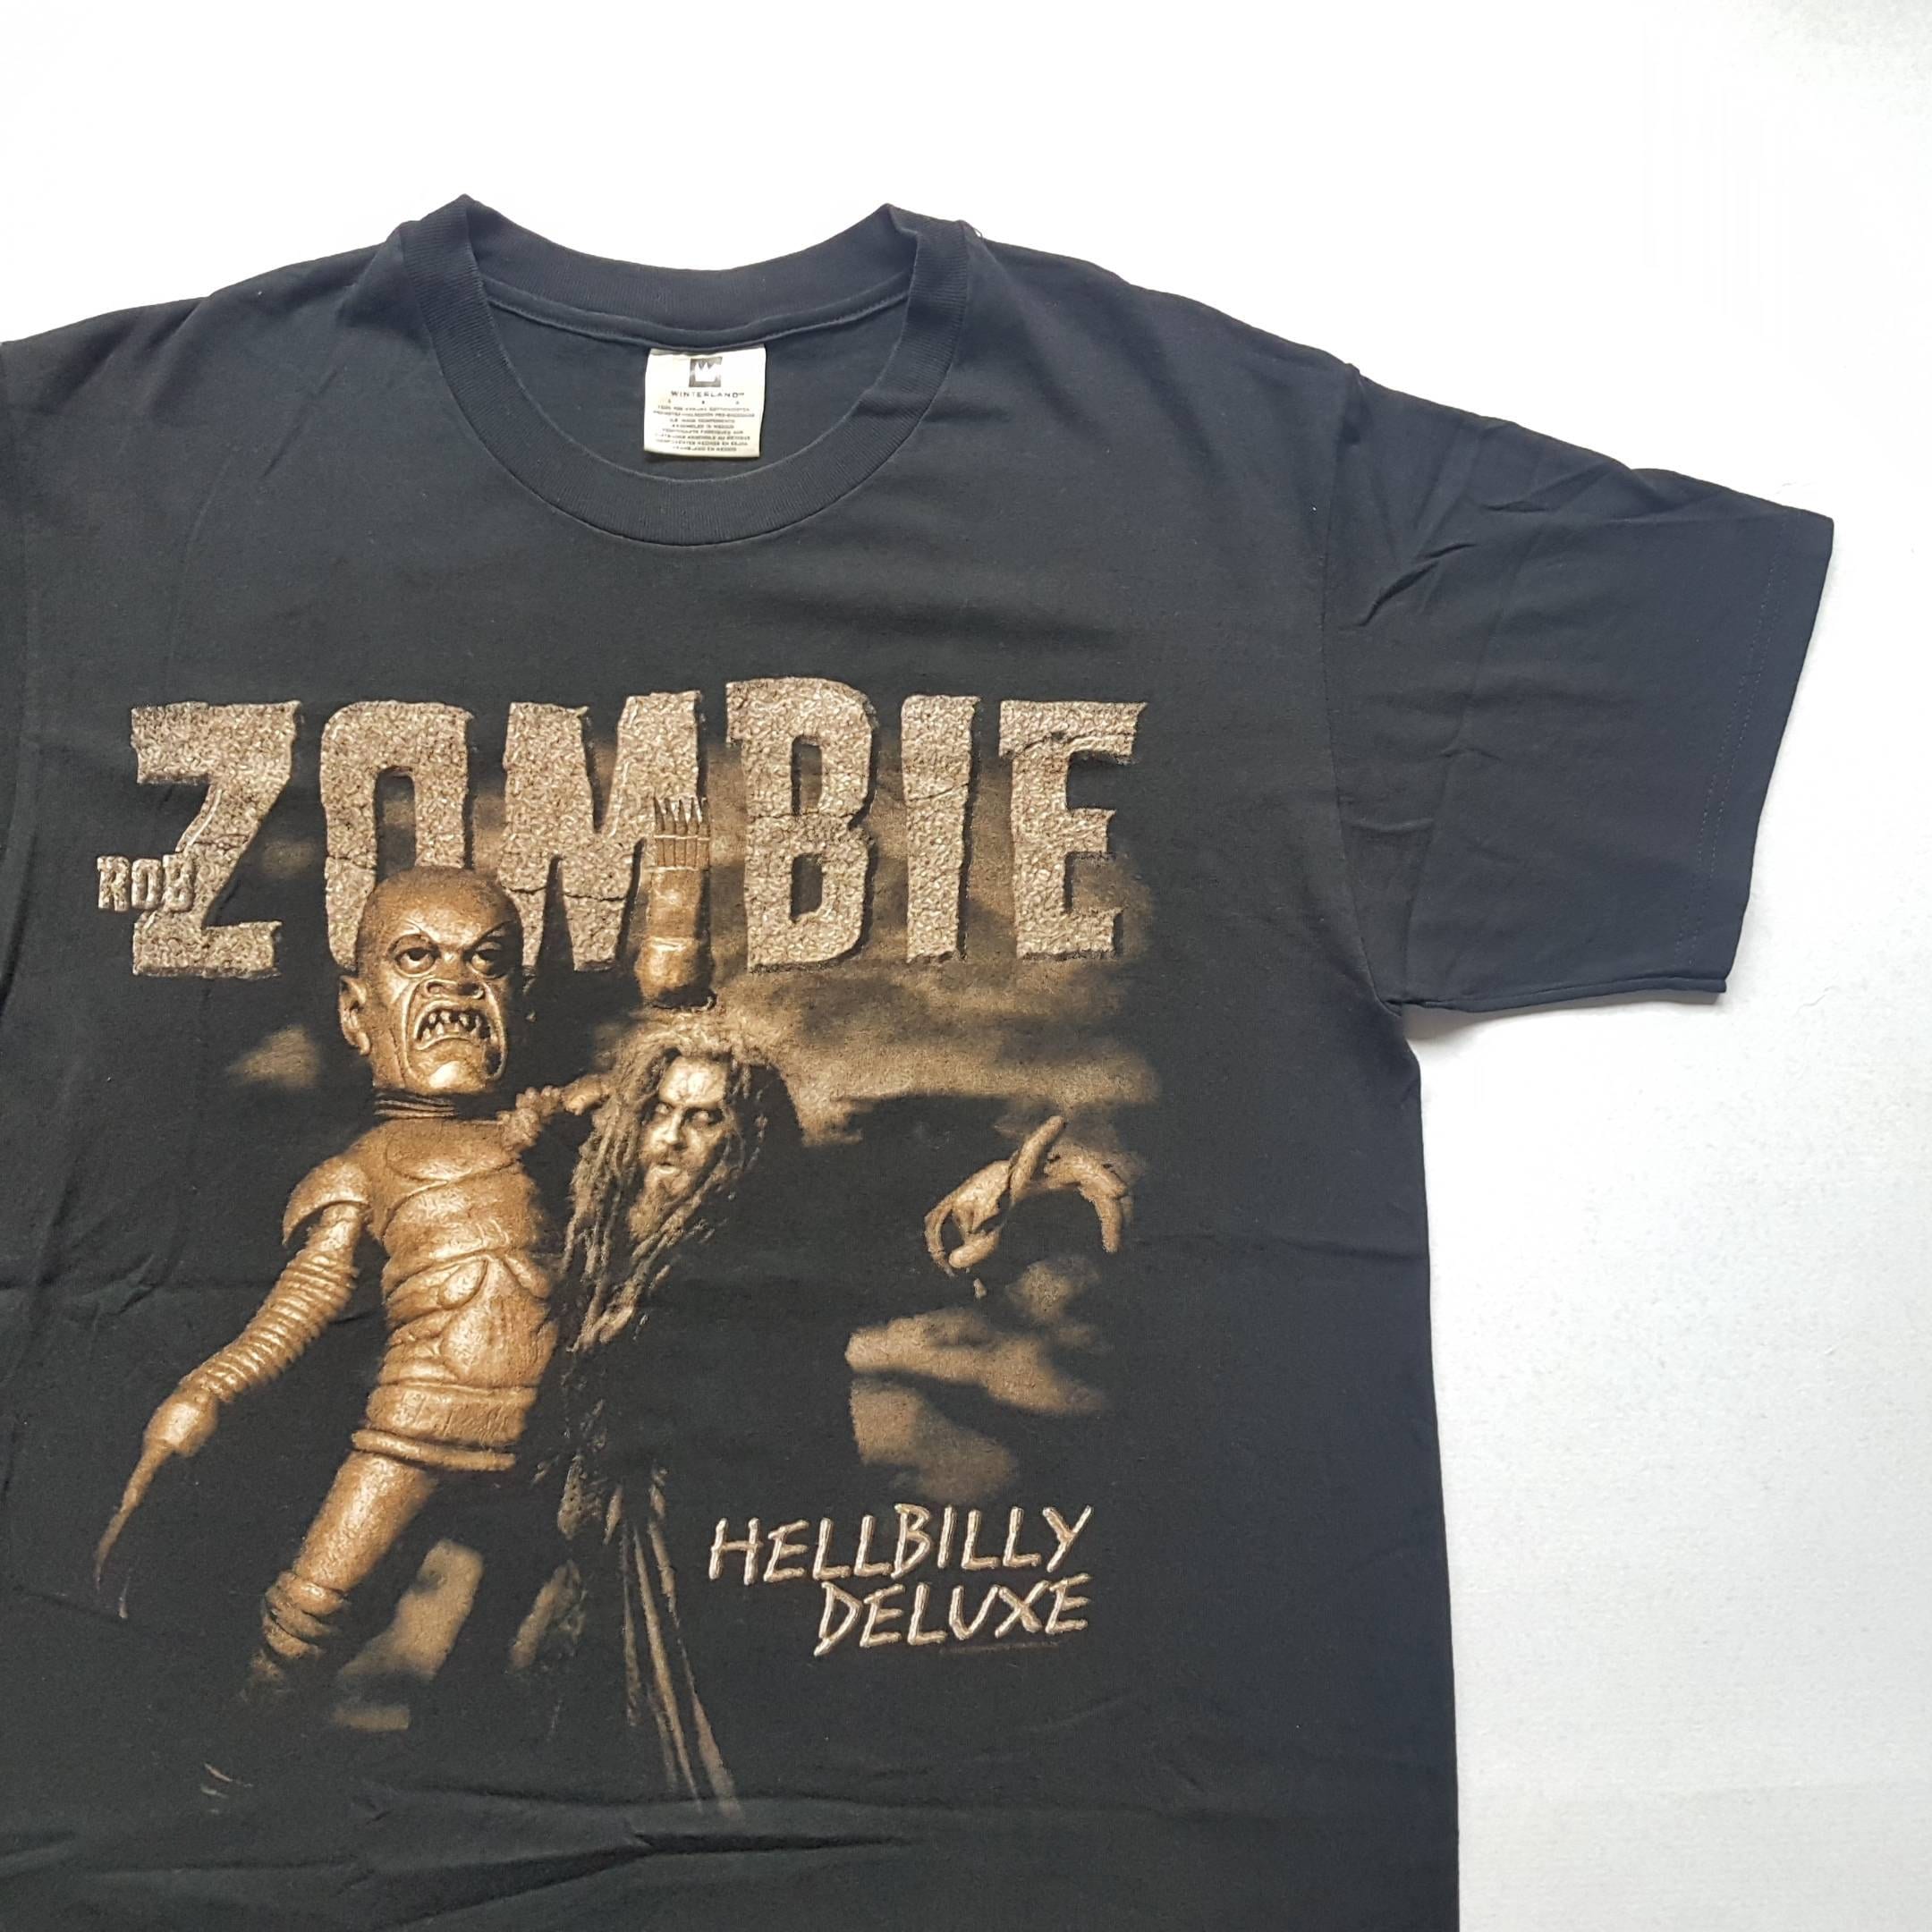 Kleding Gender-neutrale kleding volwassenen Tops & T-shirts T-shirts Vintage 1998 Rob Zombie Hellbilly Deluxe Tour shirt 